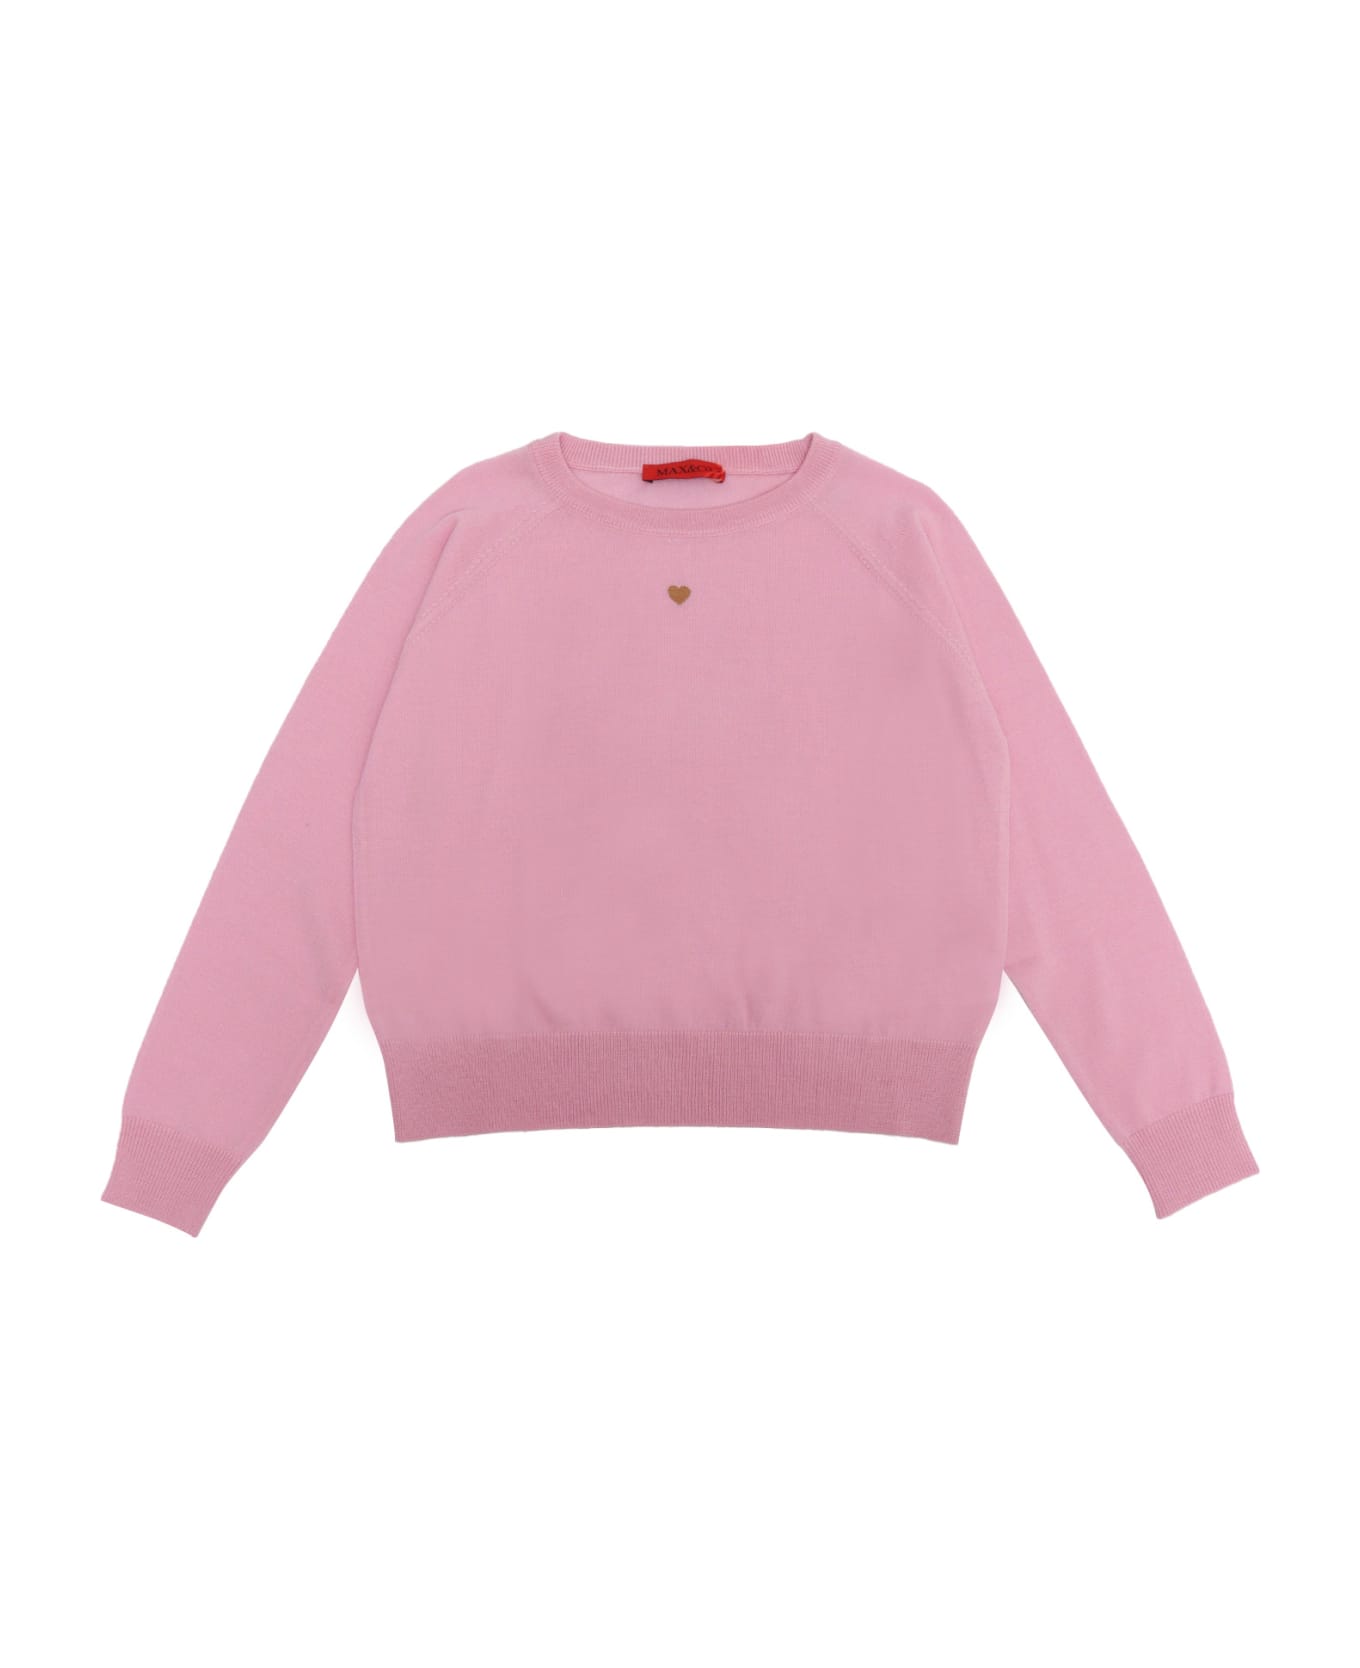 Max&Co. Pink Sweater - PURPLE